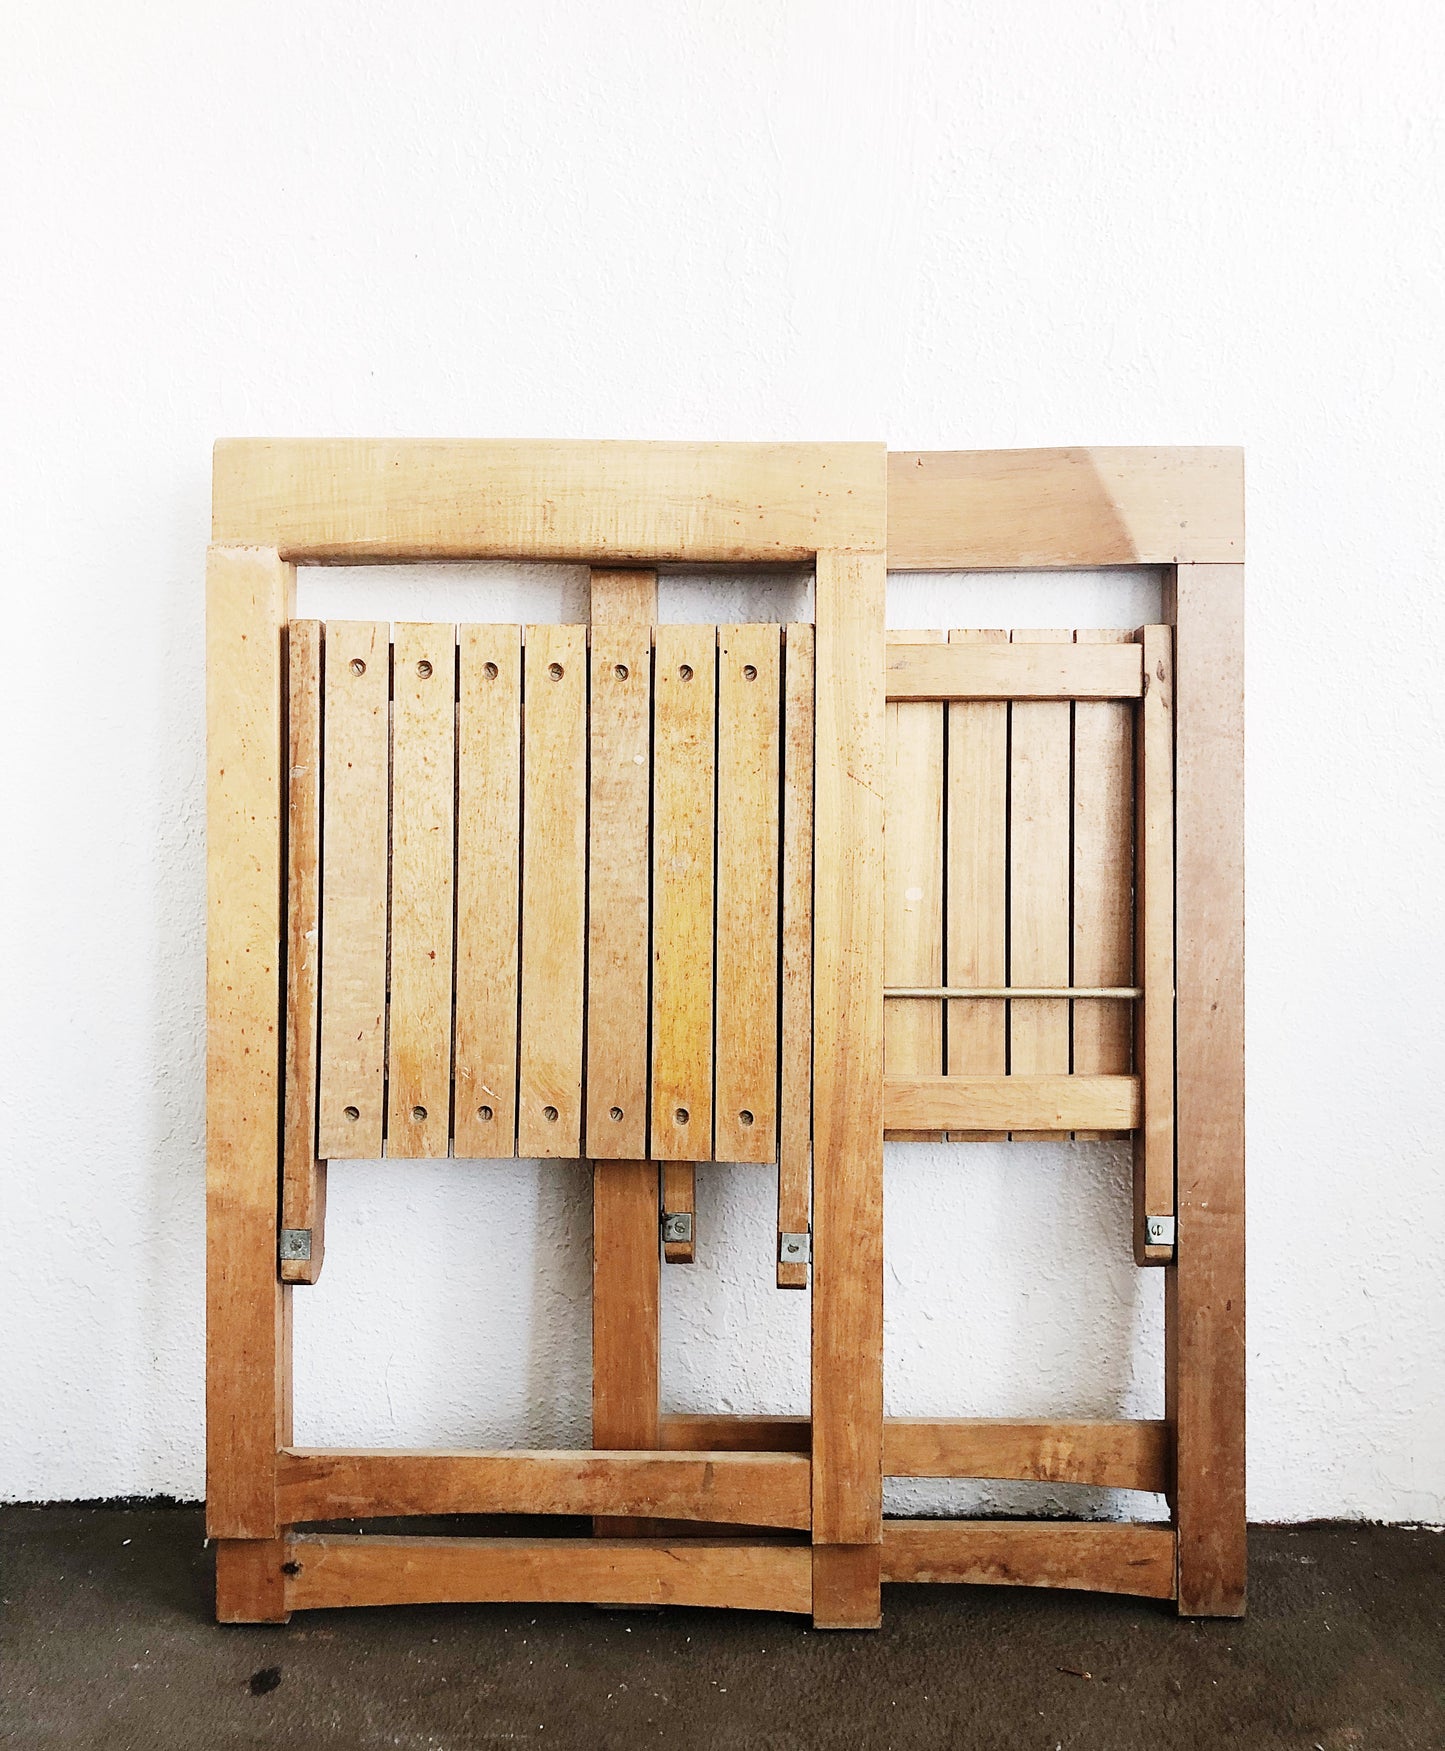 Mid Century Folding Chair